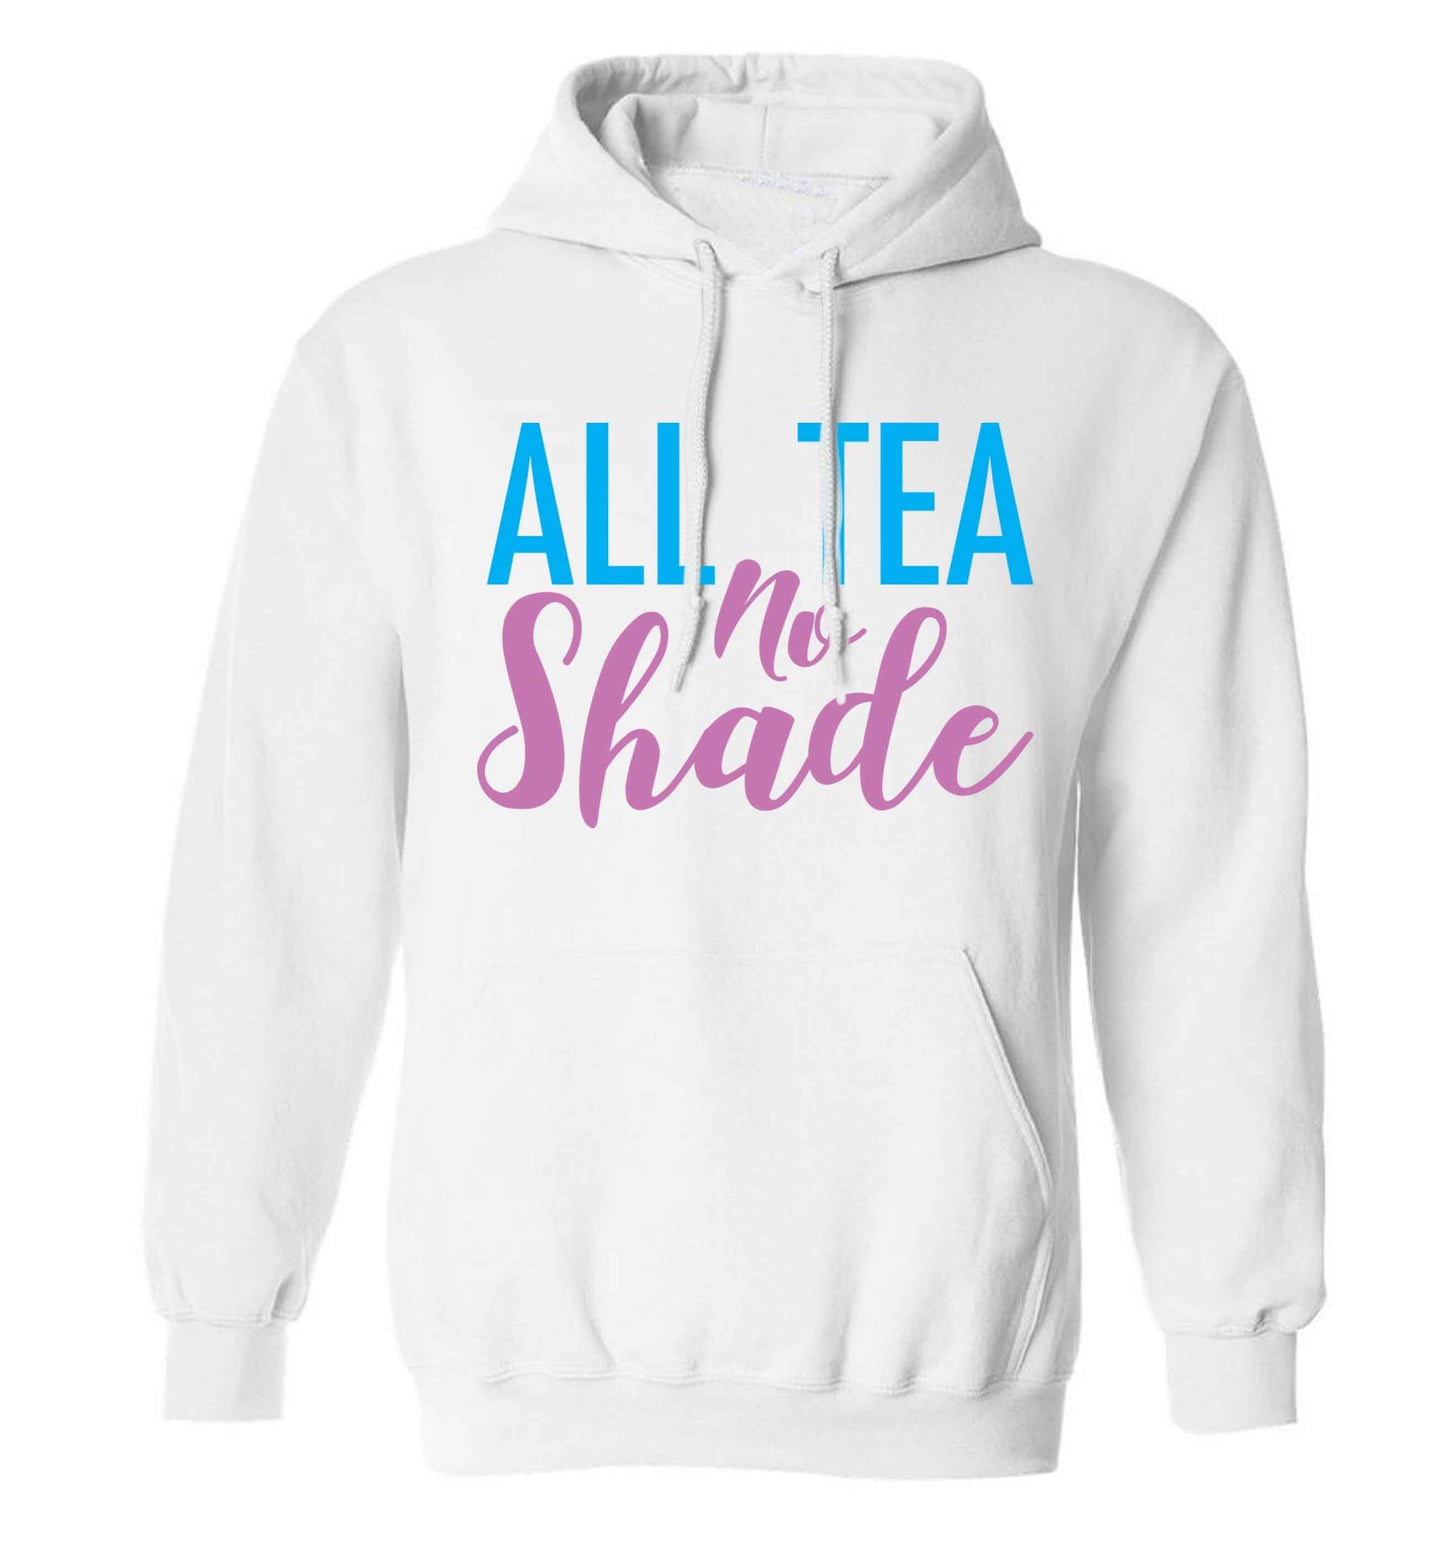 All tea no shade adults unisex white hoodie 2XL